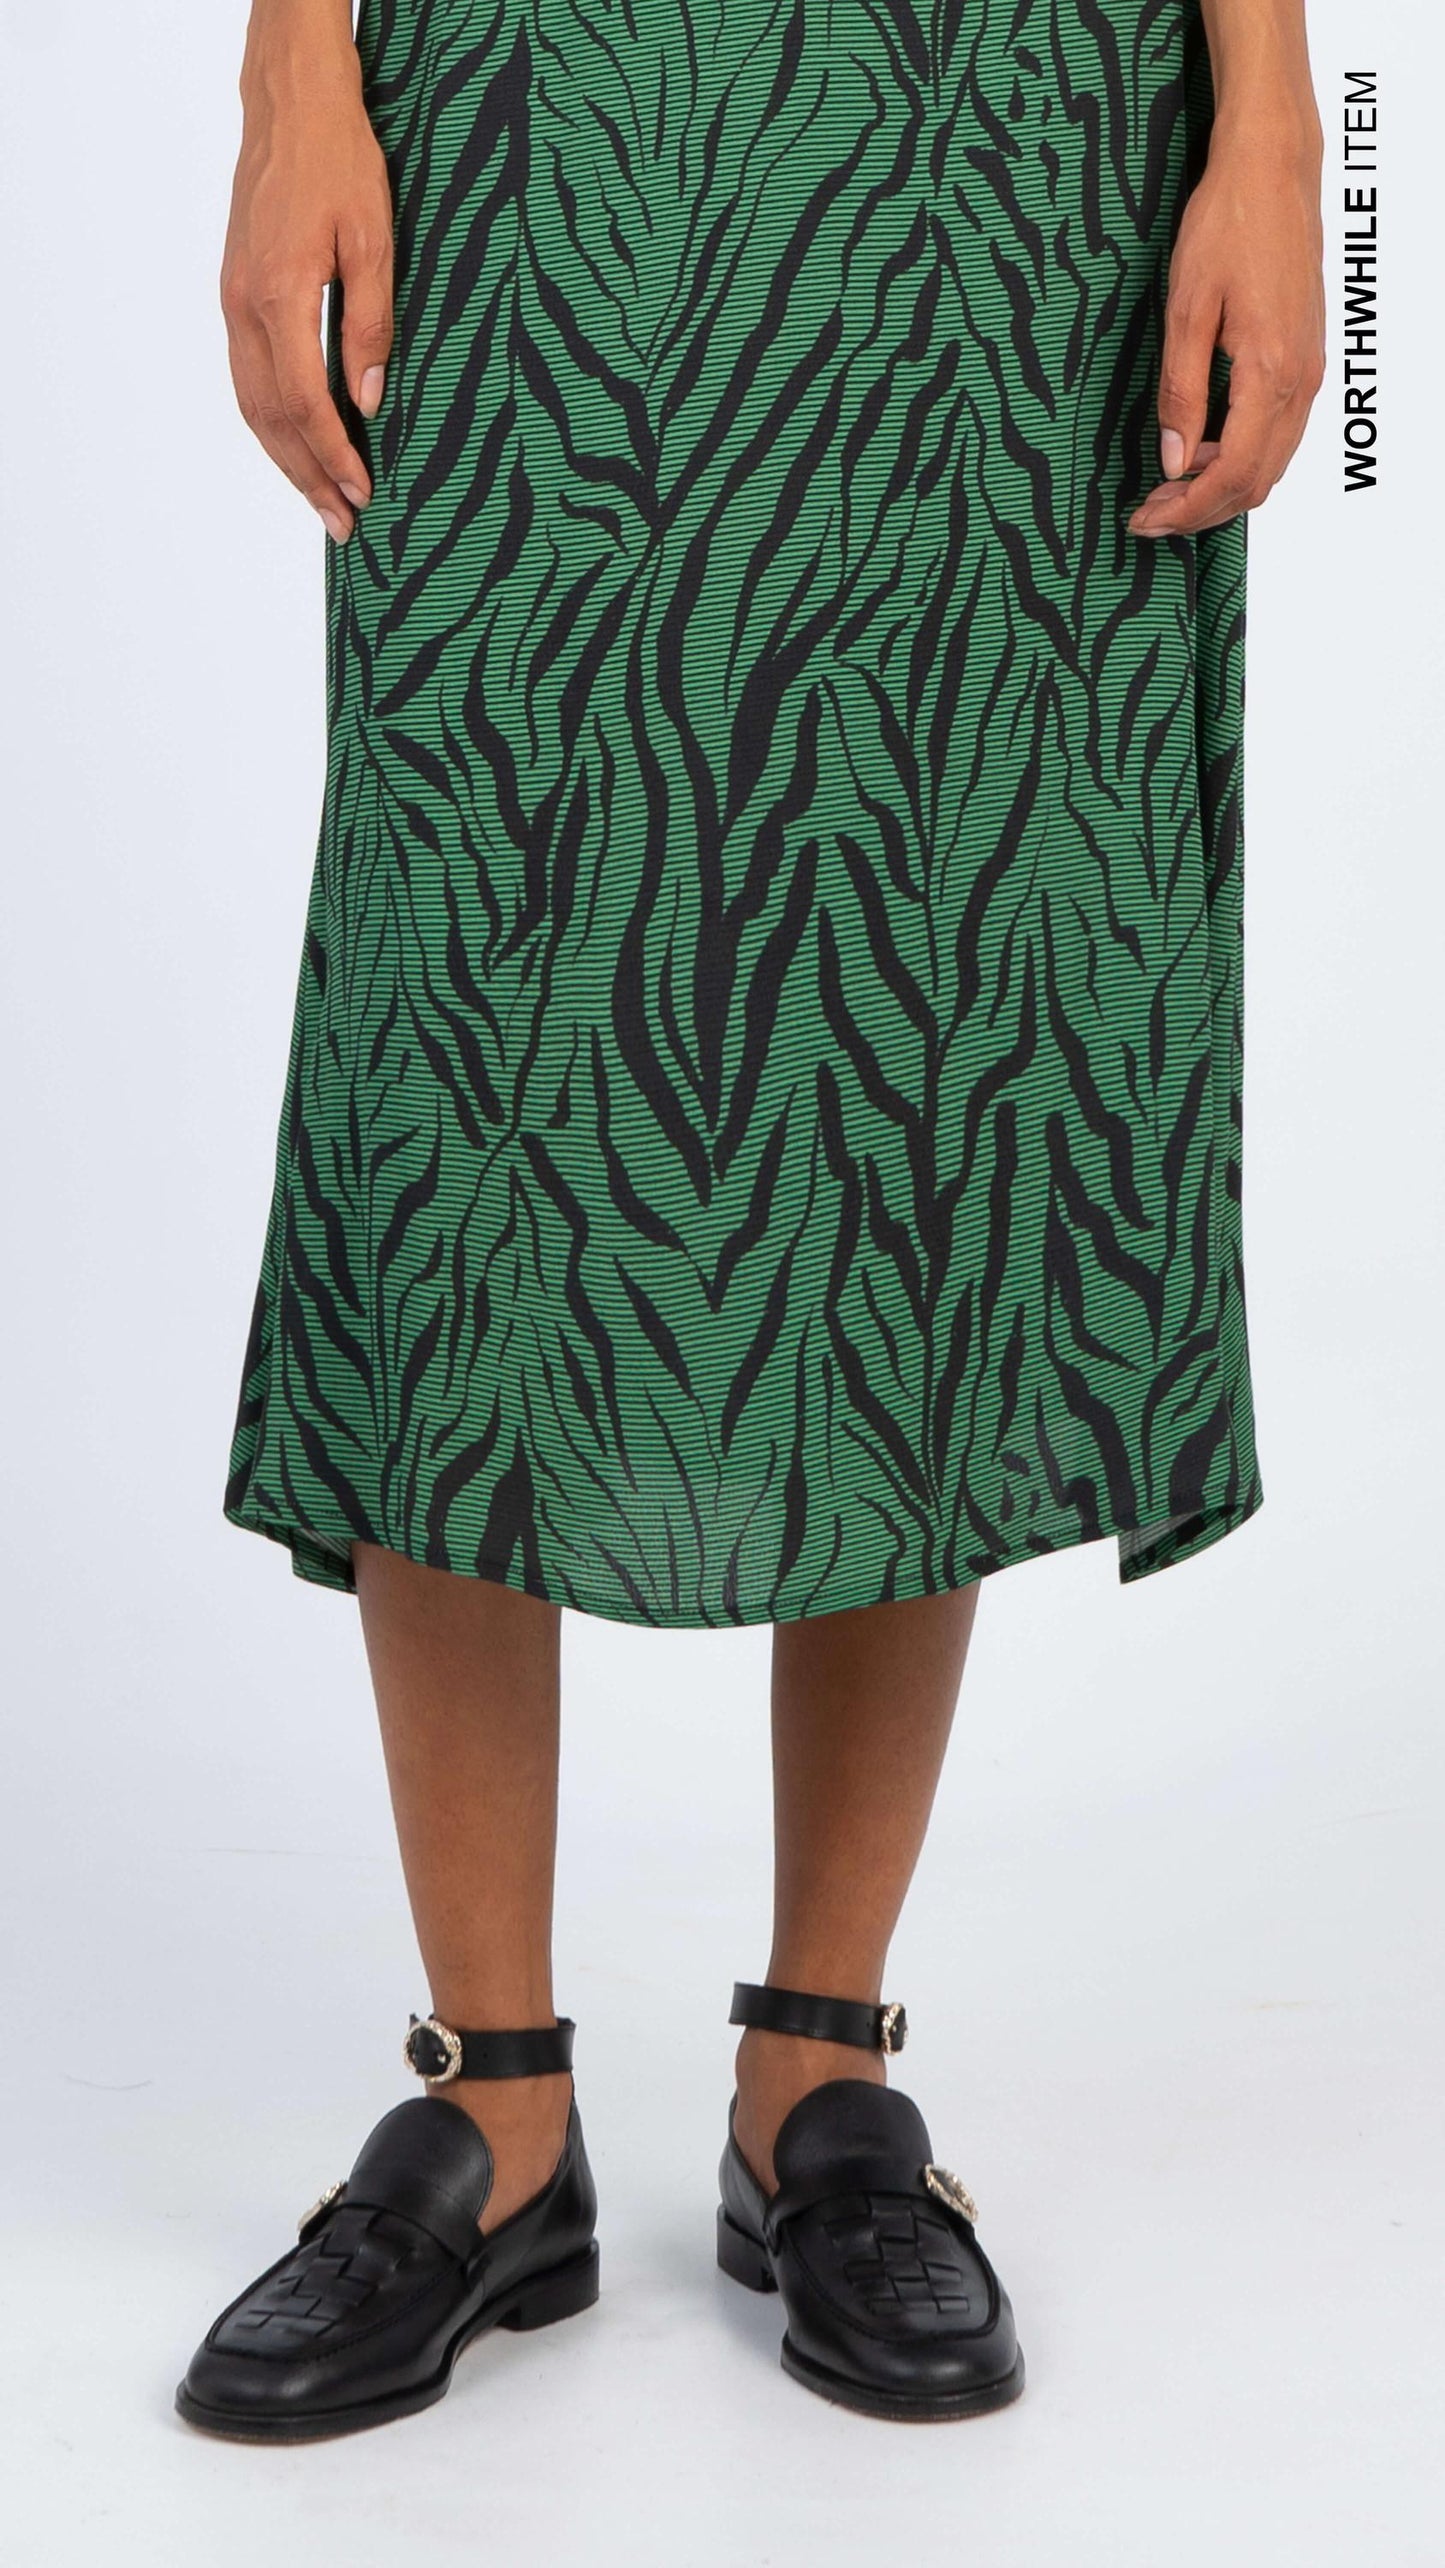 Green printed dress